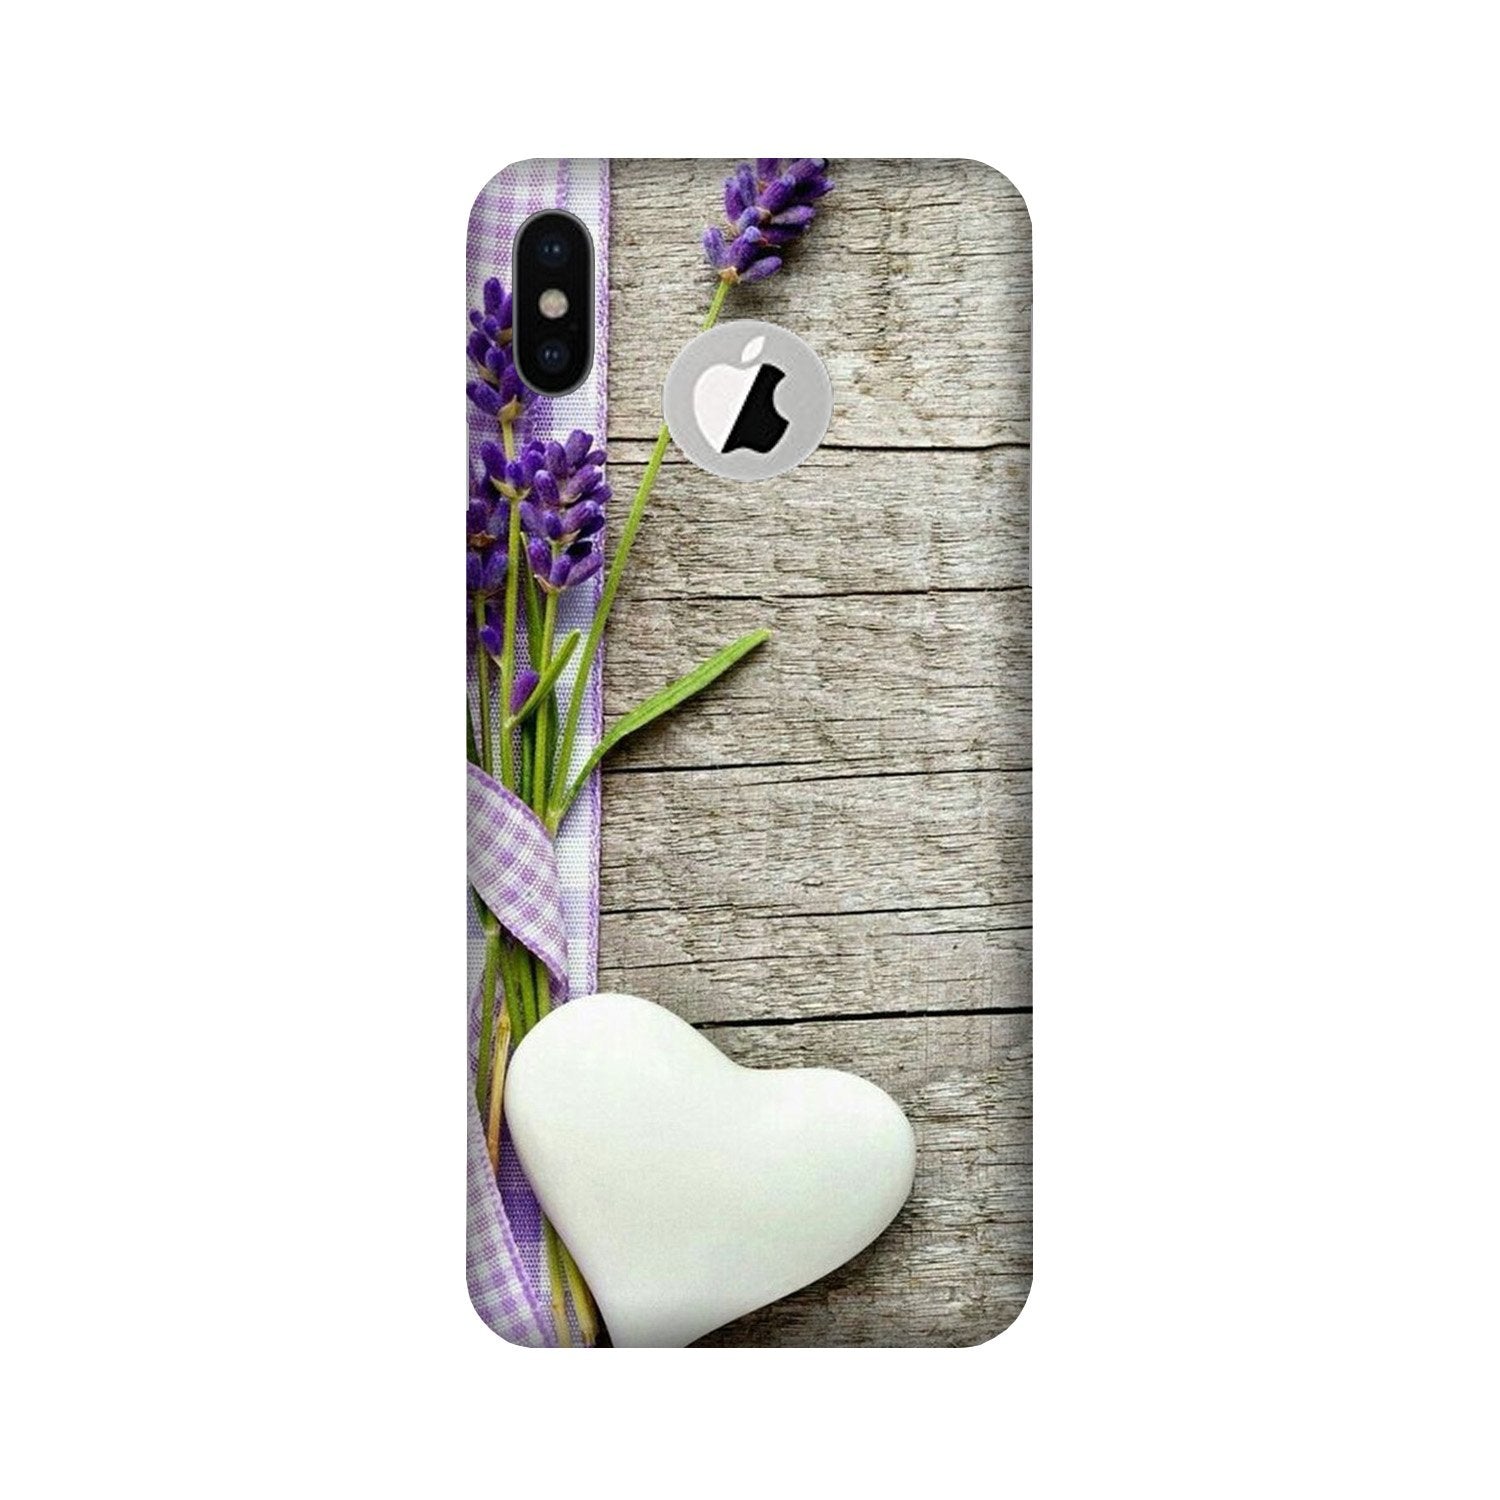 White Heart Case for iPhone Xs logo cut  (Design No. 298)